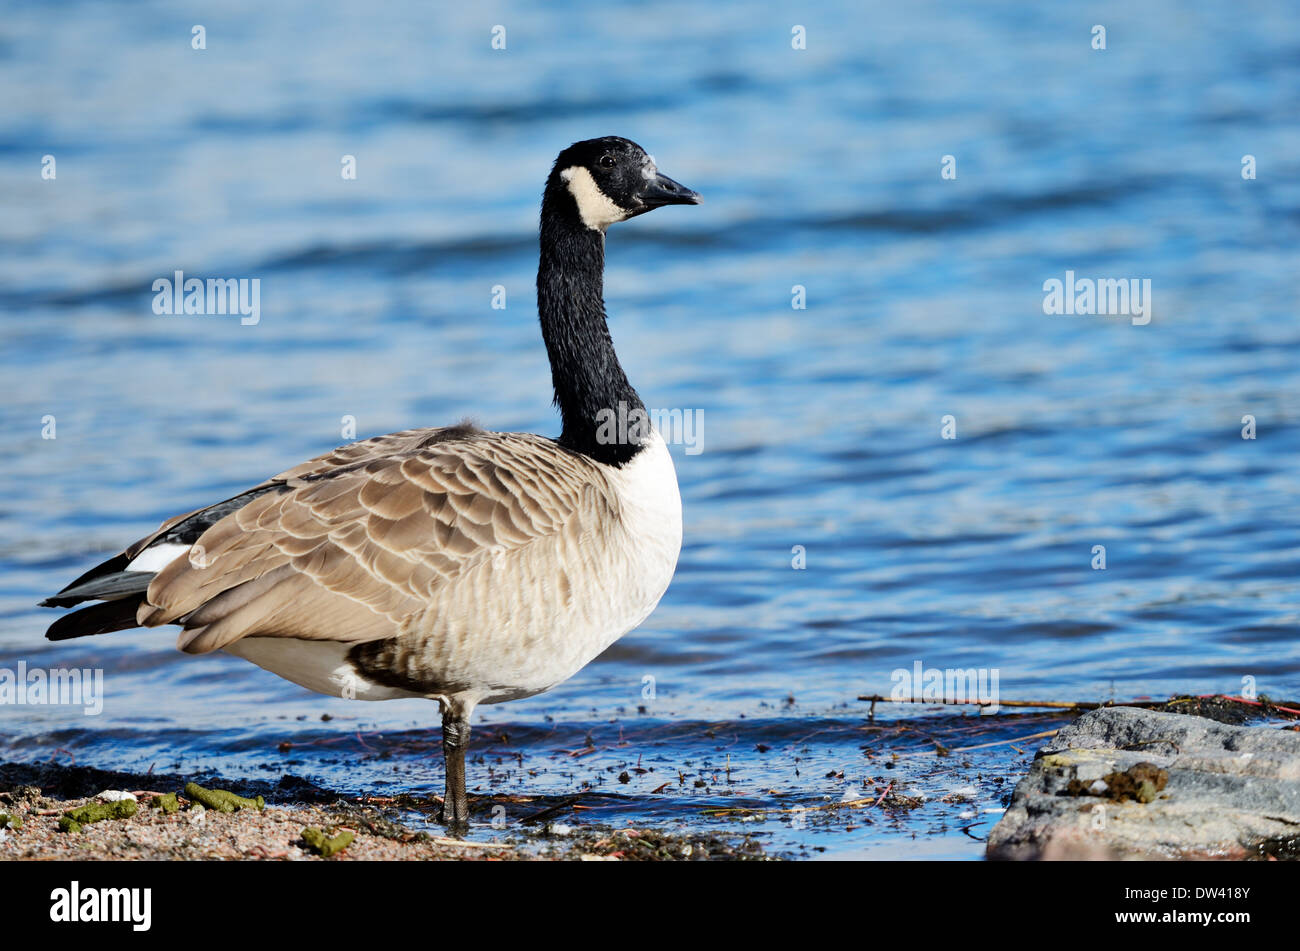 canadian goose on Gulf coast of the Baltic Sea Stock Photo